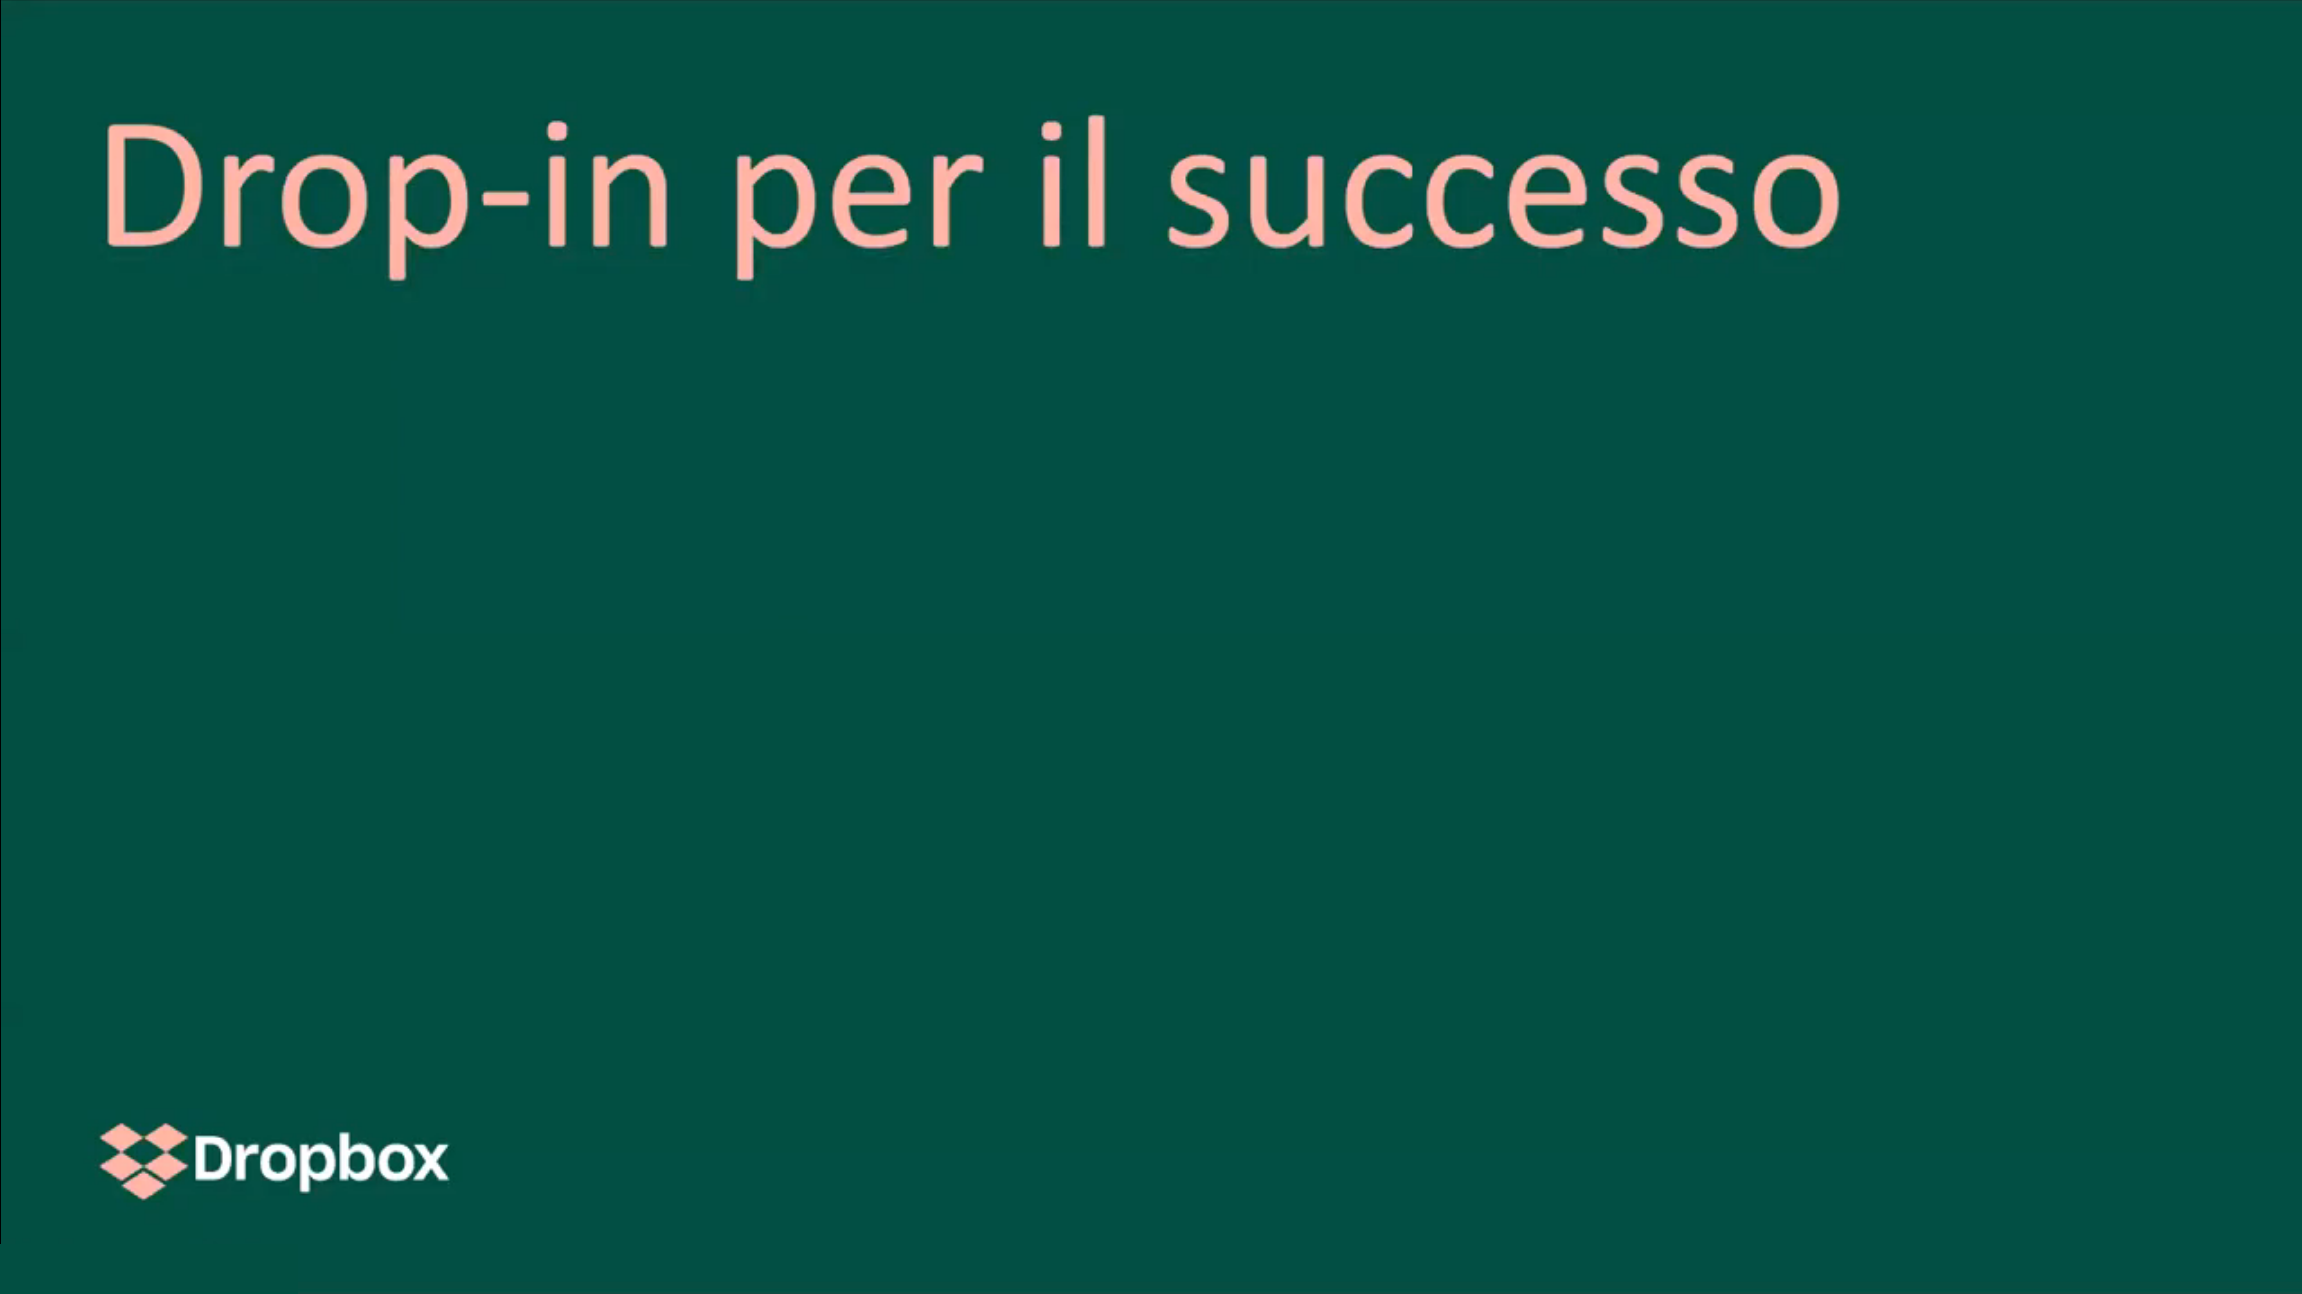 Drop-in for success - Italian